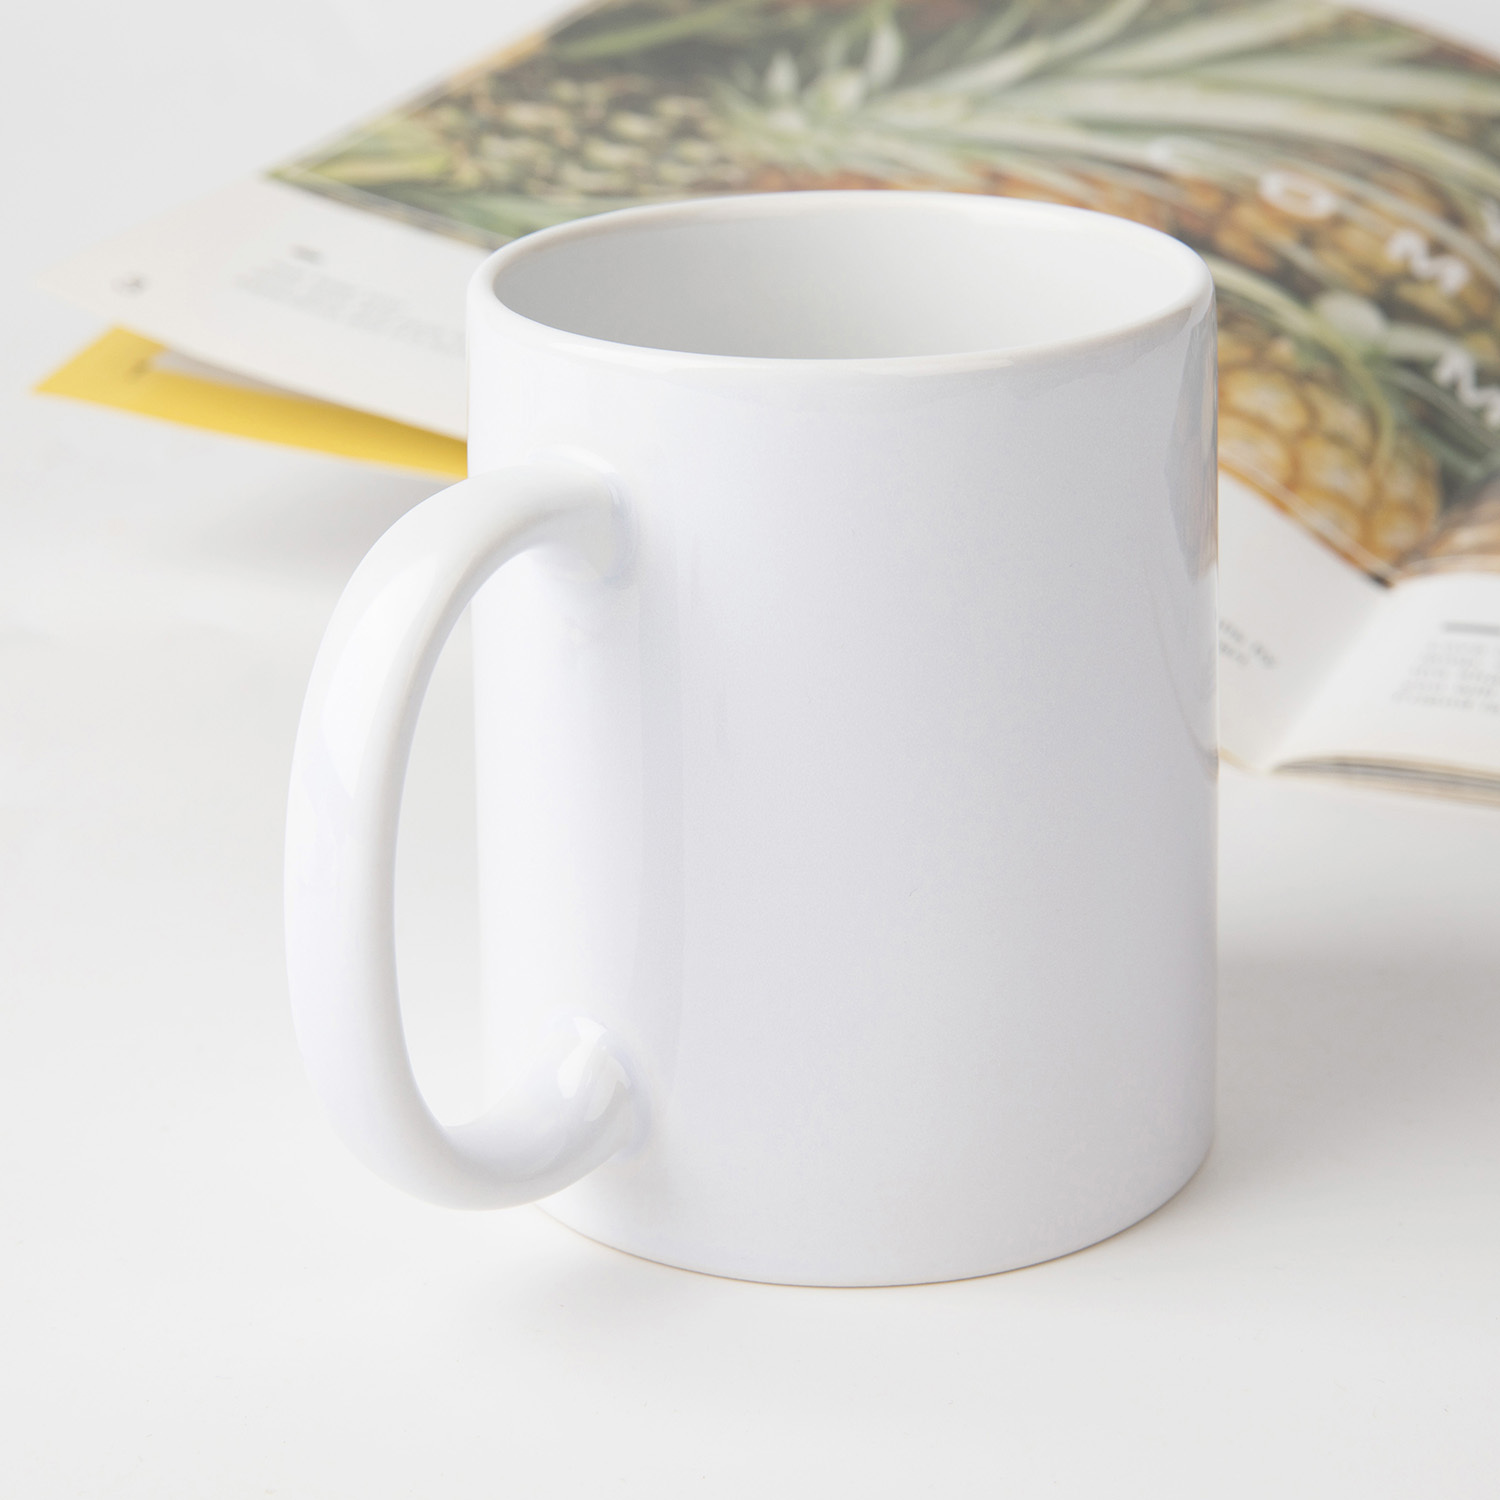 Print On Demand White Ceramic Mug - Print On Demand | HugePOD-5